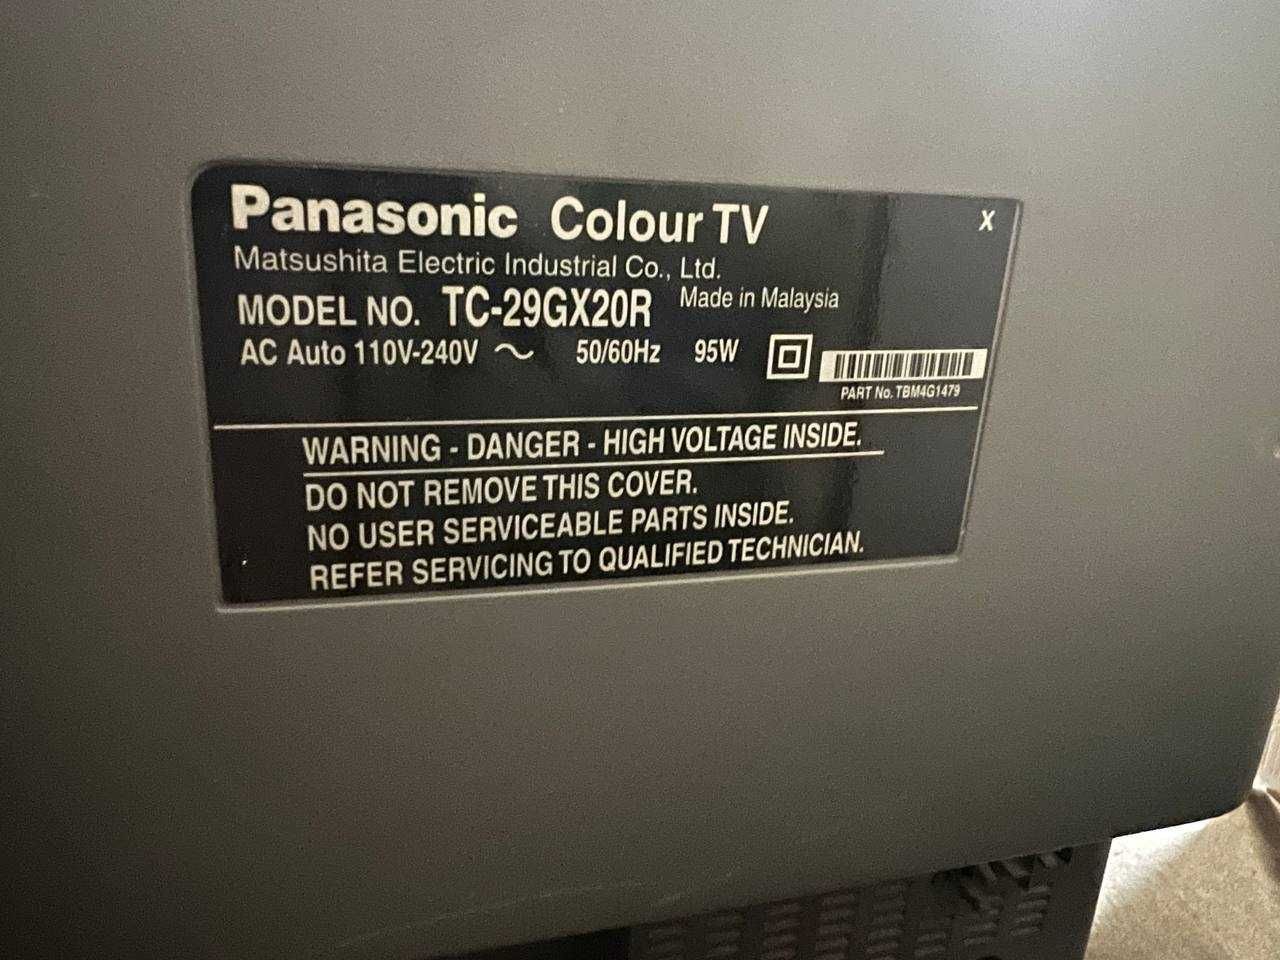 Panasonic Colour TV